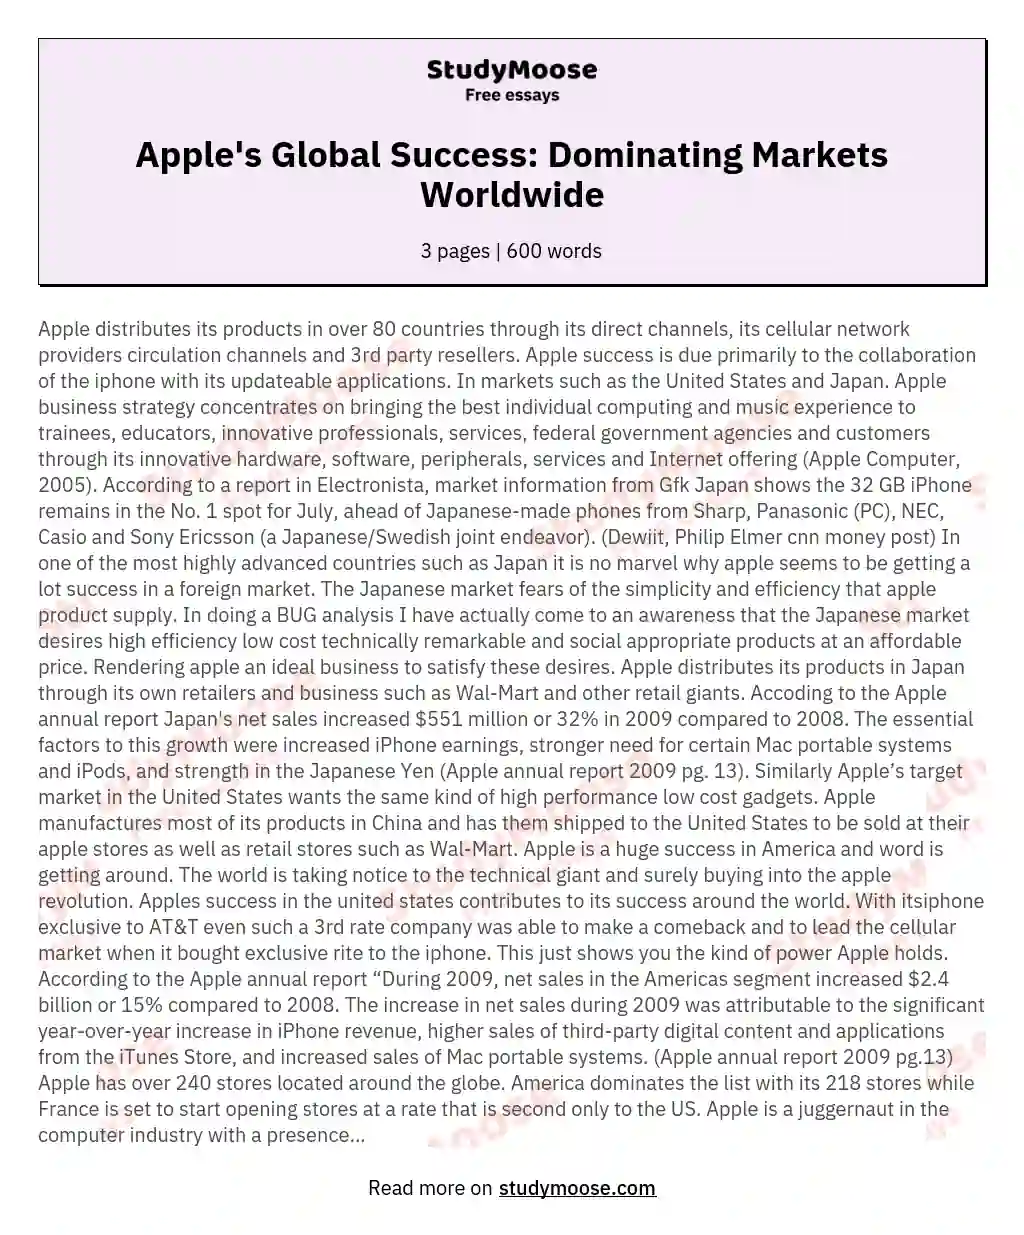 Apple's Global Success: Dominating Markets Worldwide